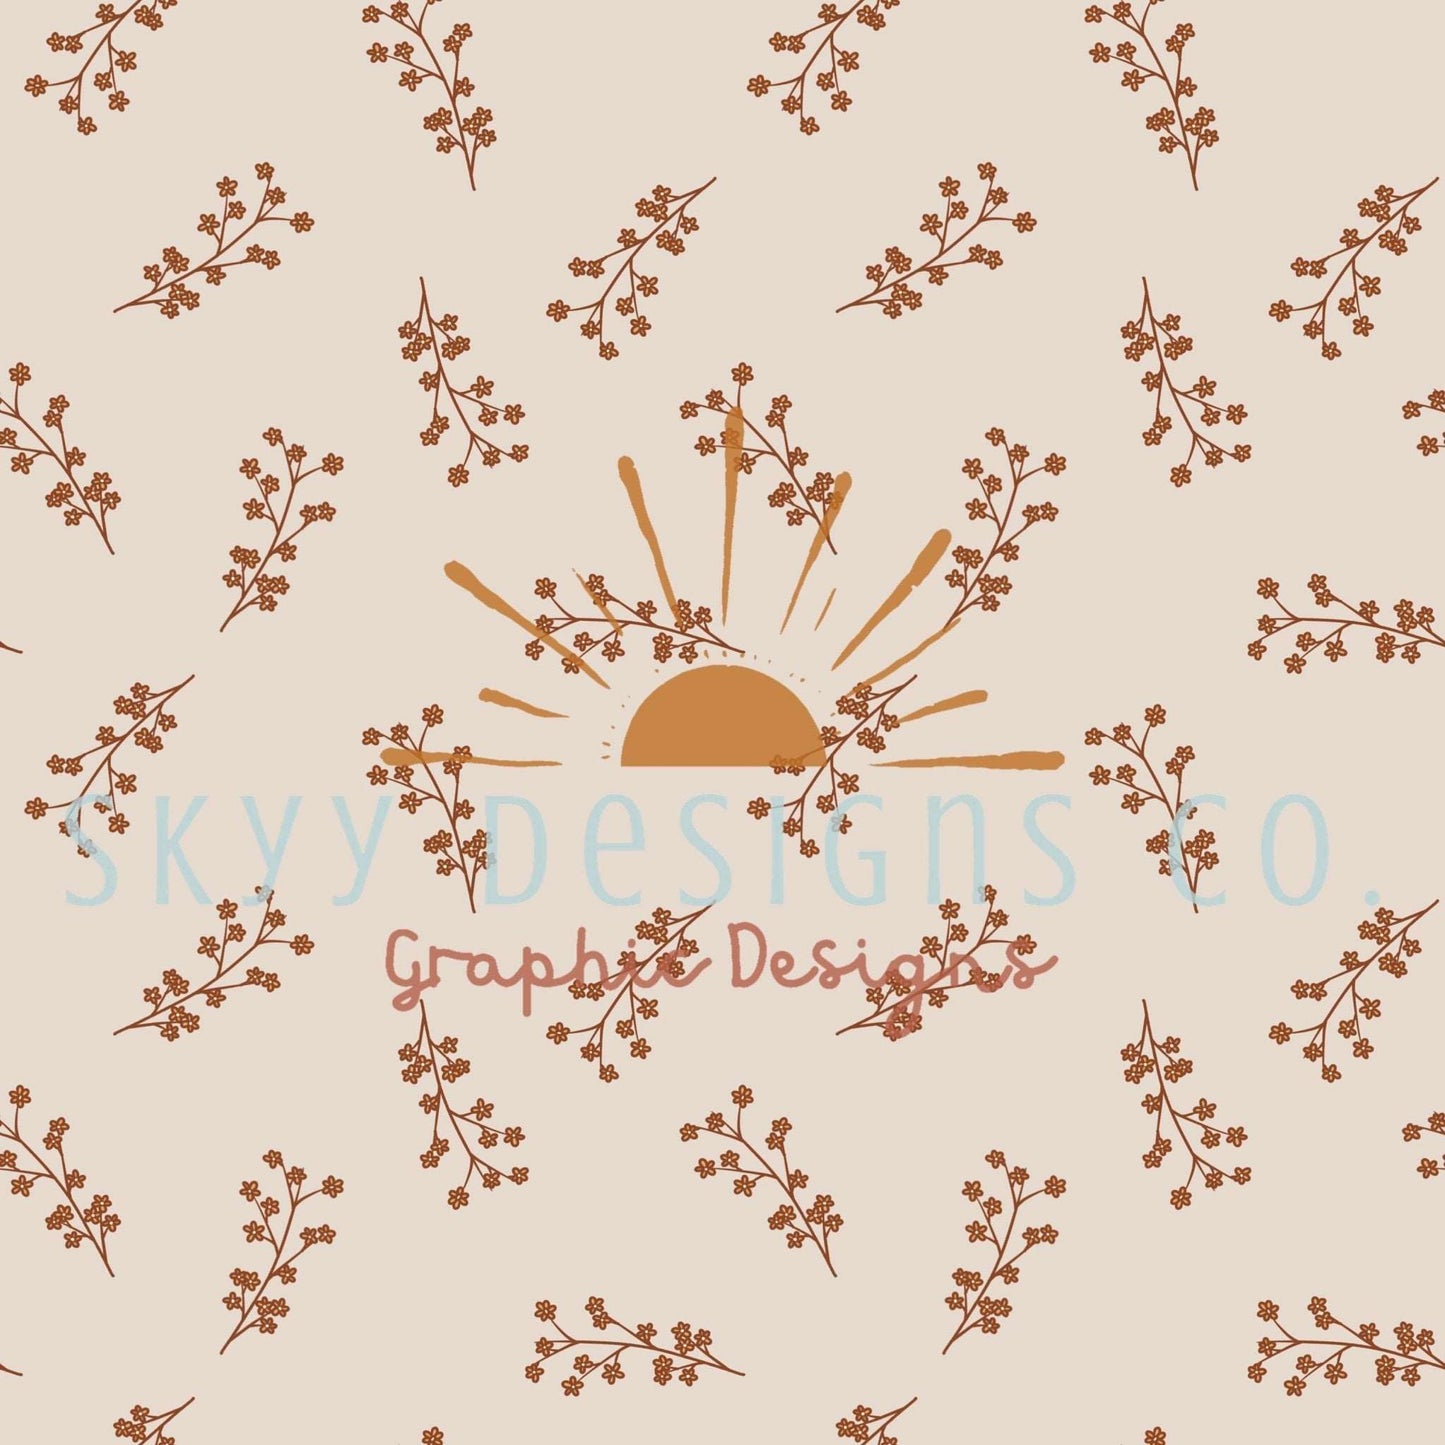 Neutral dainty floral seamless pattern - SkyyDesignsCo